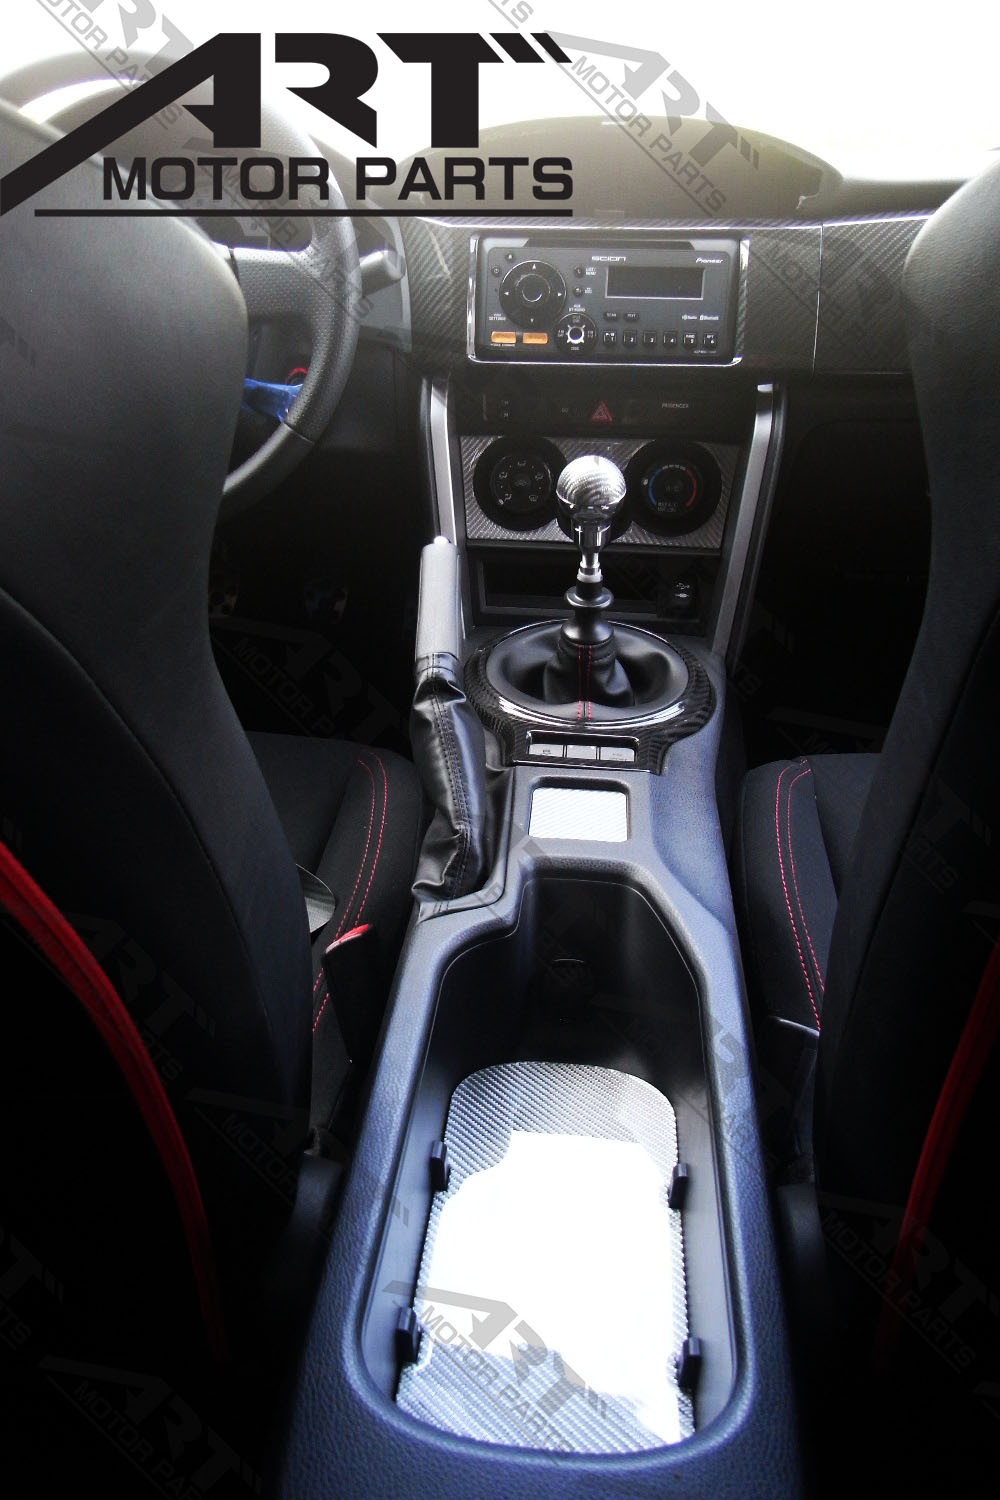 BRZ,GT-86,FR-S Carbon Fiber Interior Panel